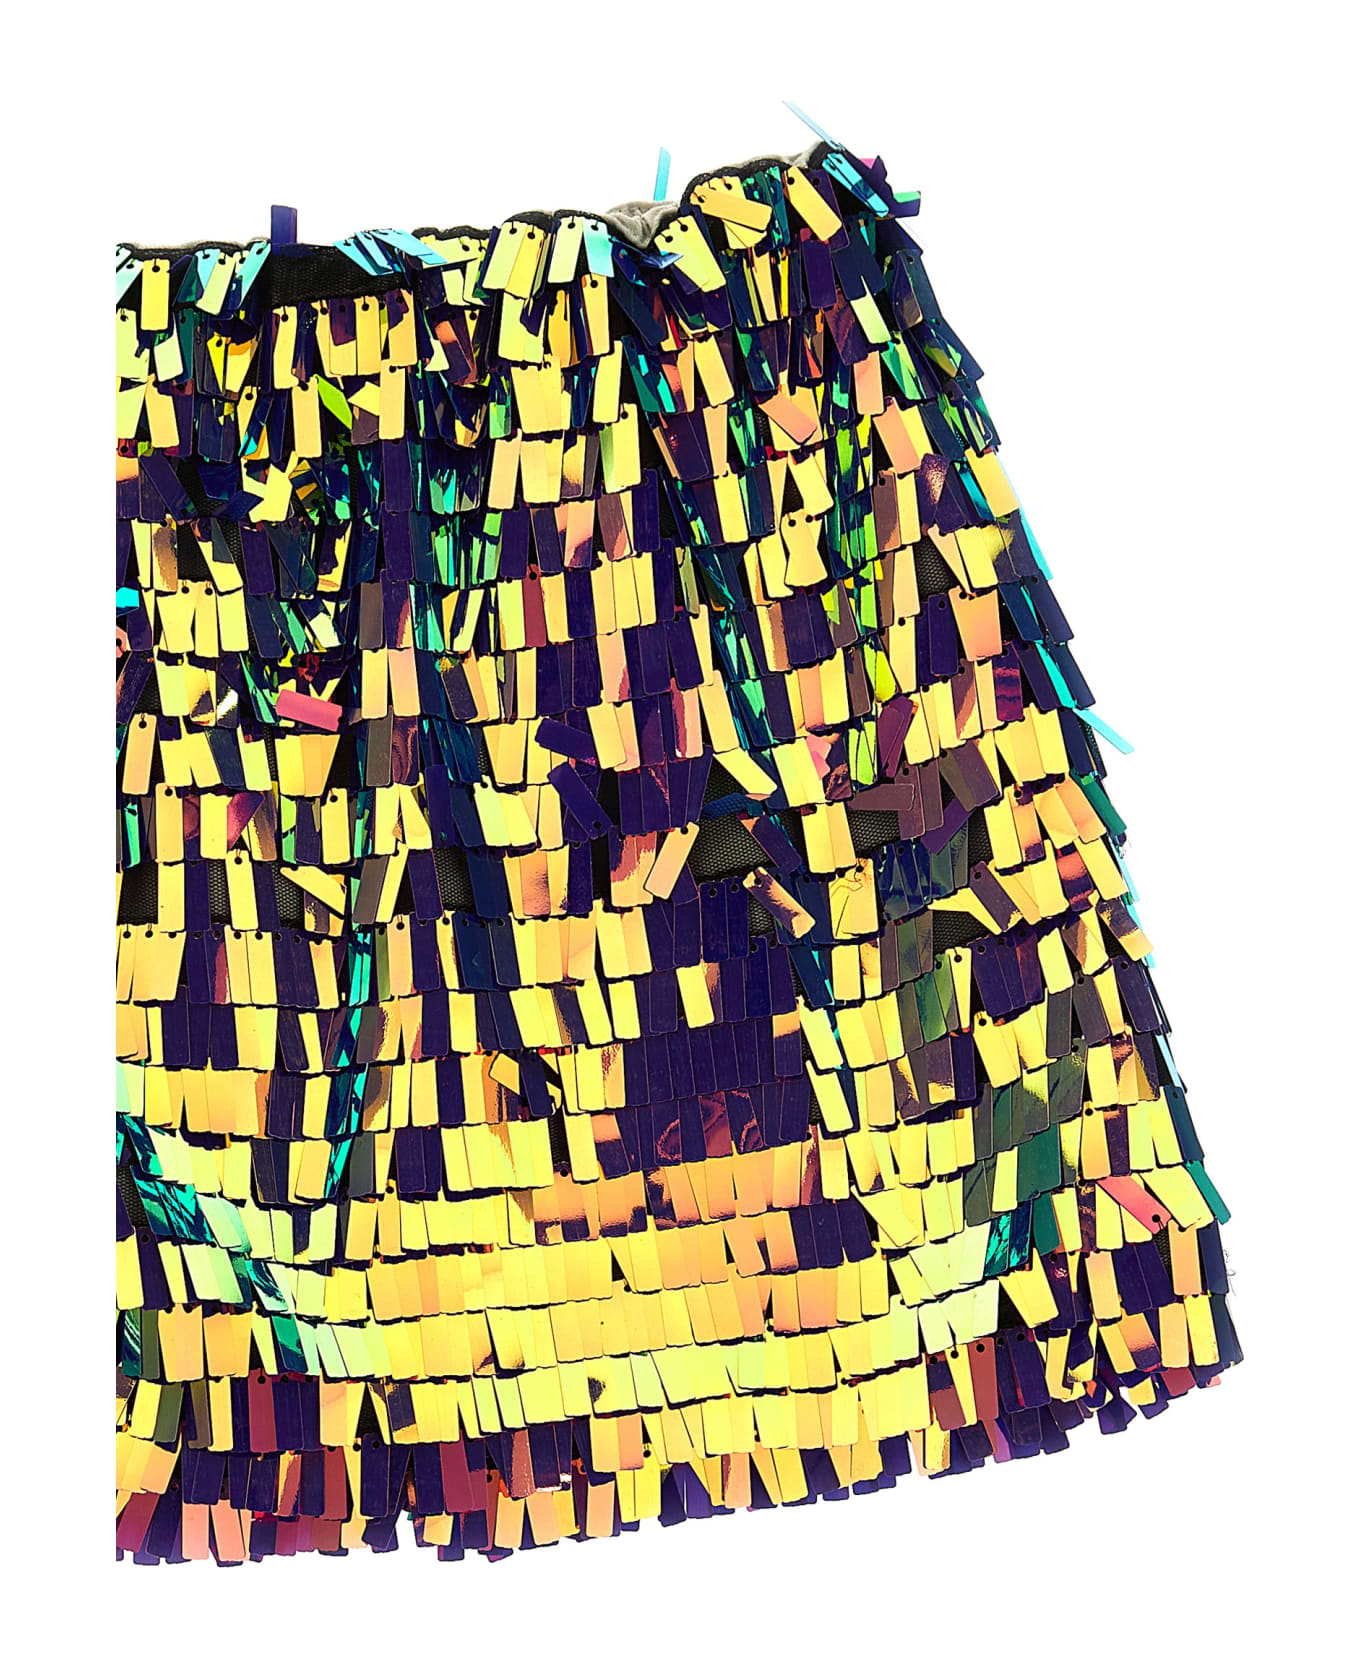 Douuod Sequin Miniskirt - Multicolor